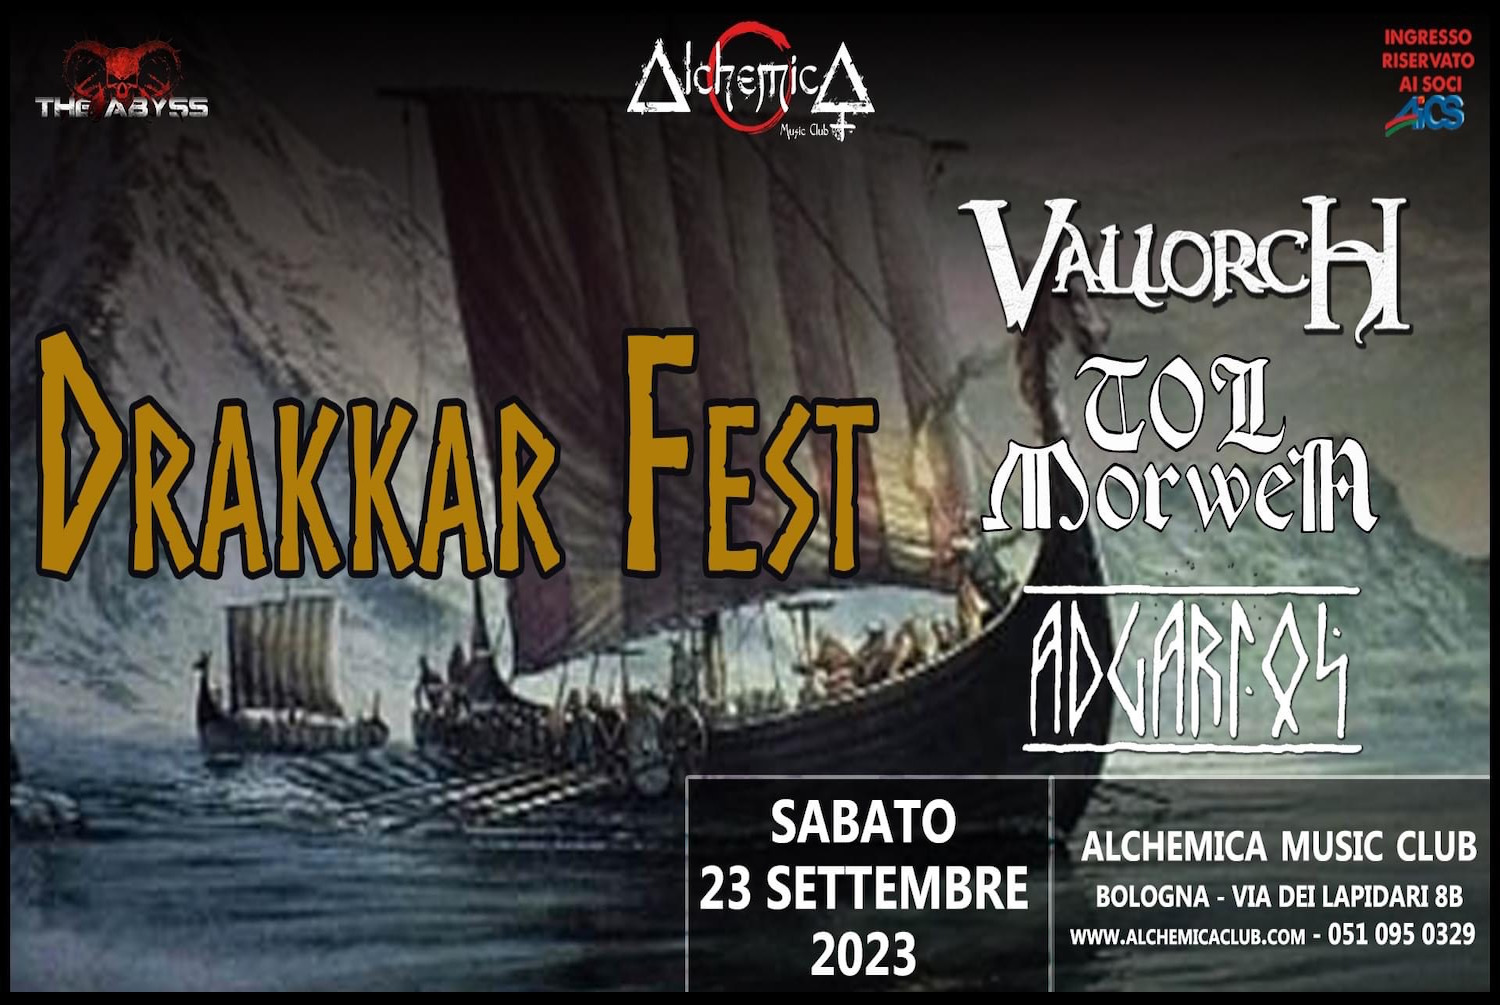 DRAKKAR FEST – festival Folk metal presso Alchemica di Bologna